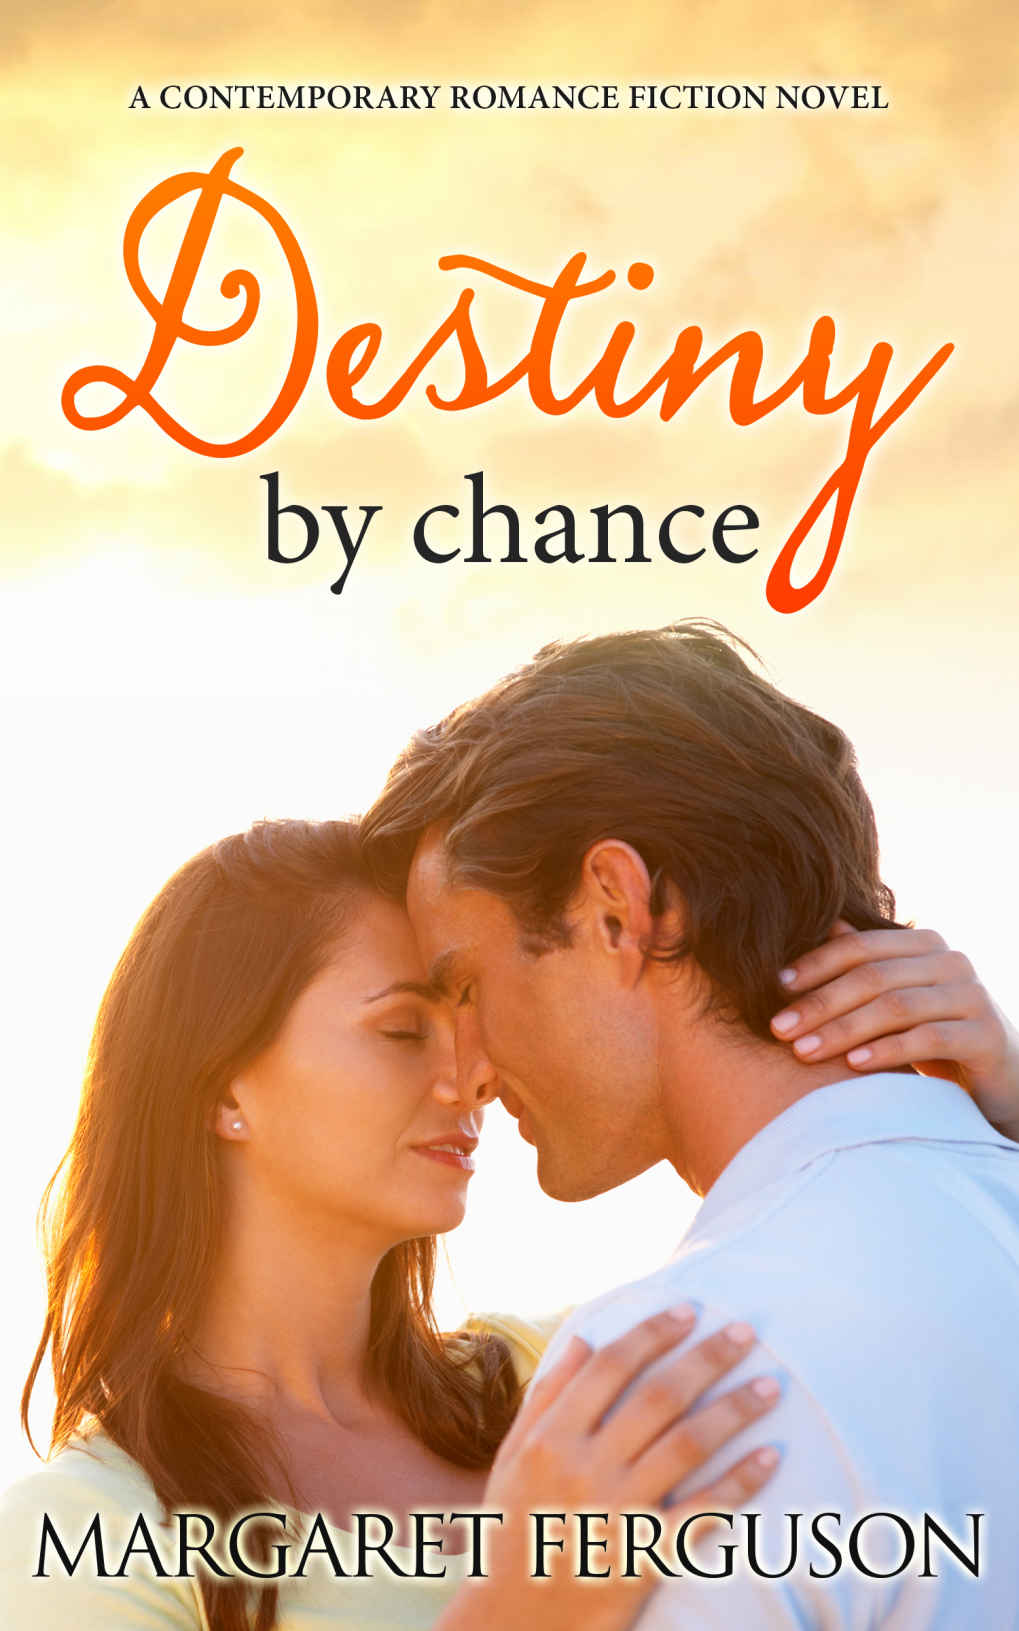 read-destiny-by-chance-a-contemporary-romance-fiction-novel-by